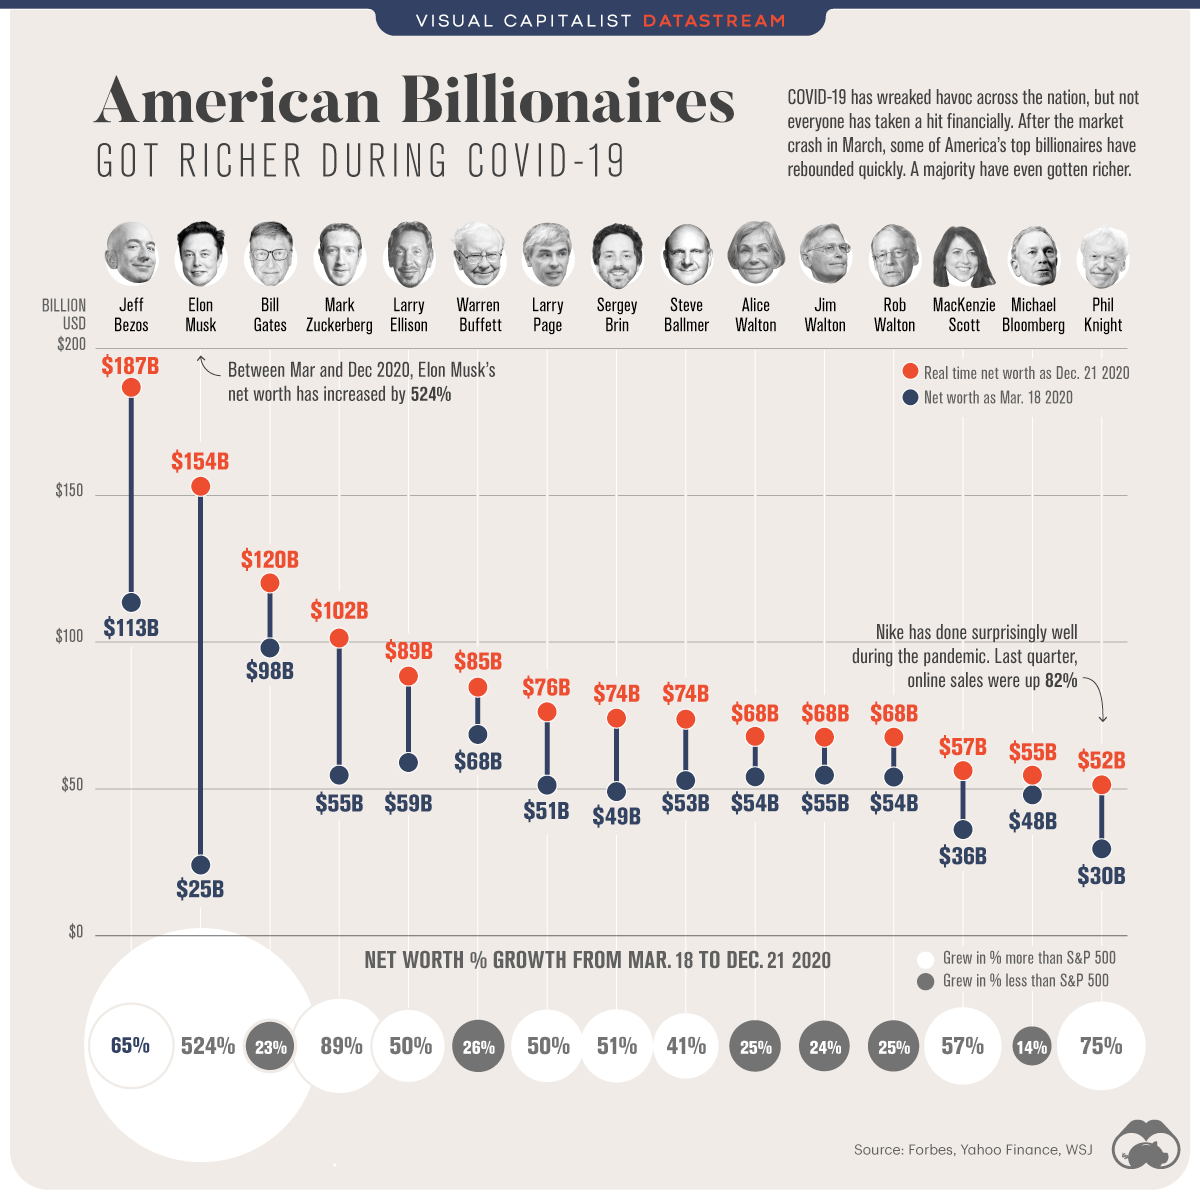 American Billionaires During COVID